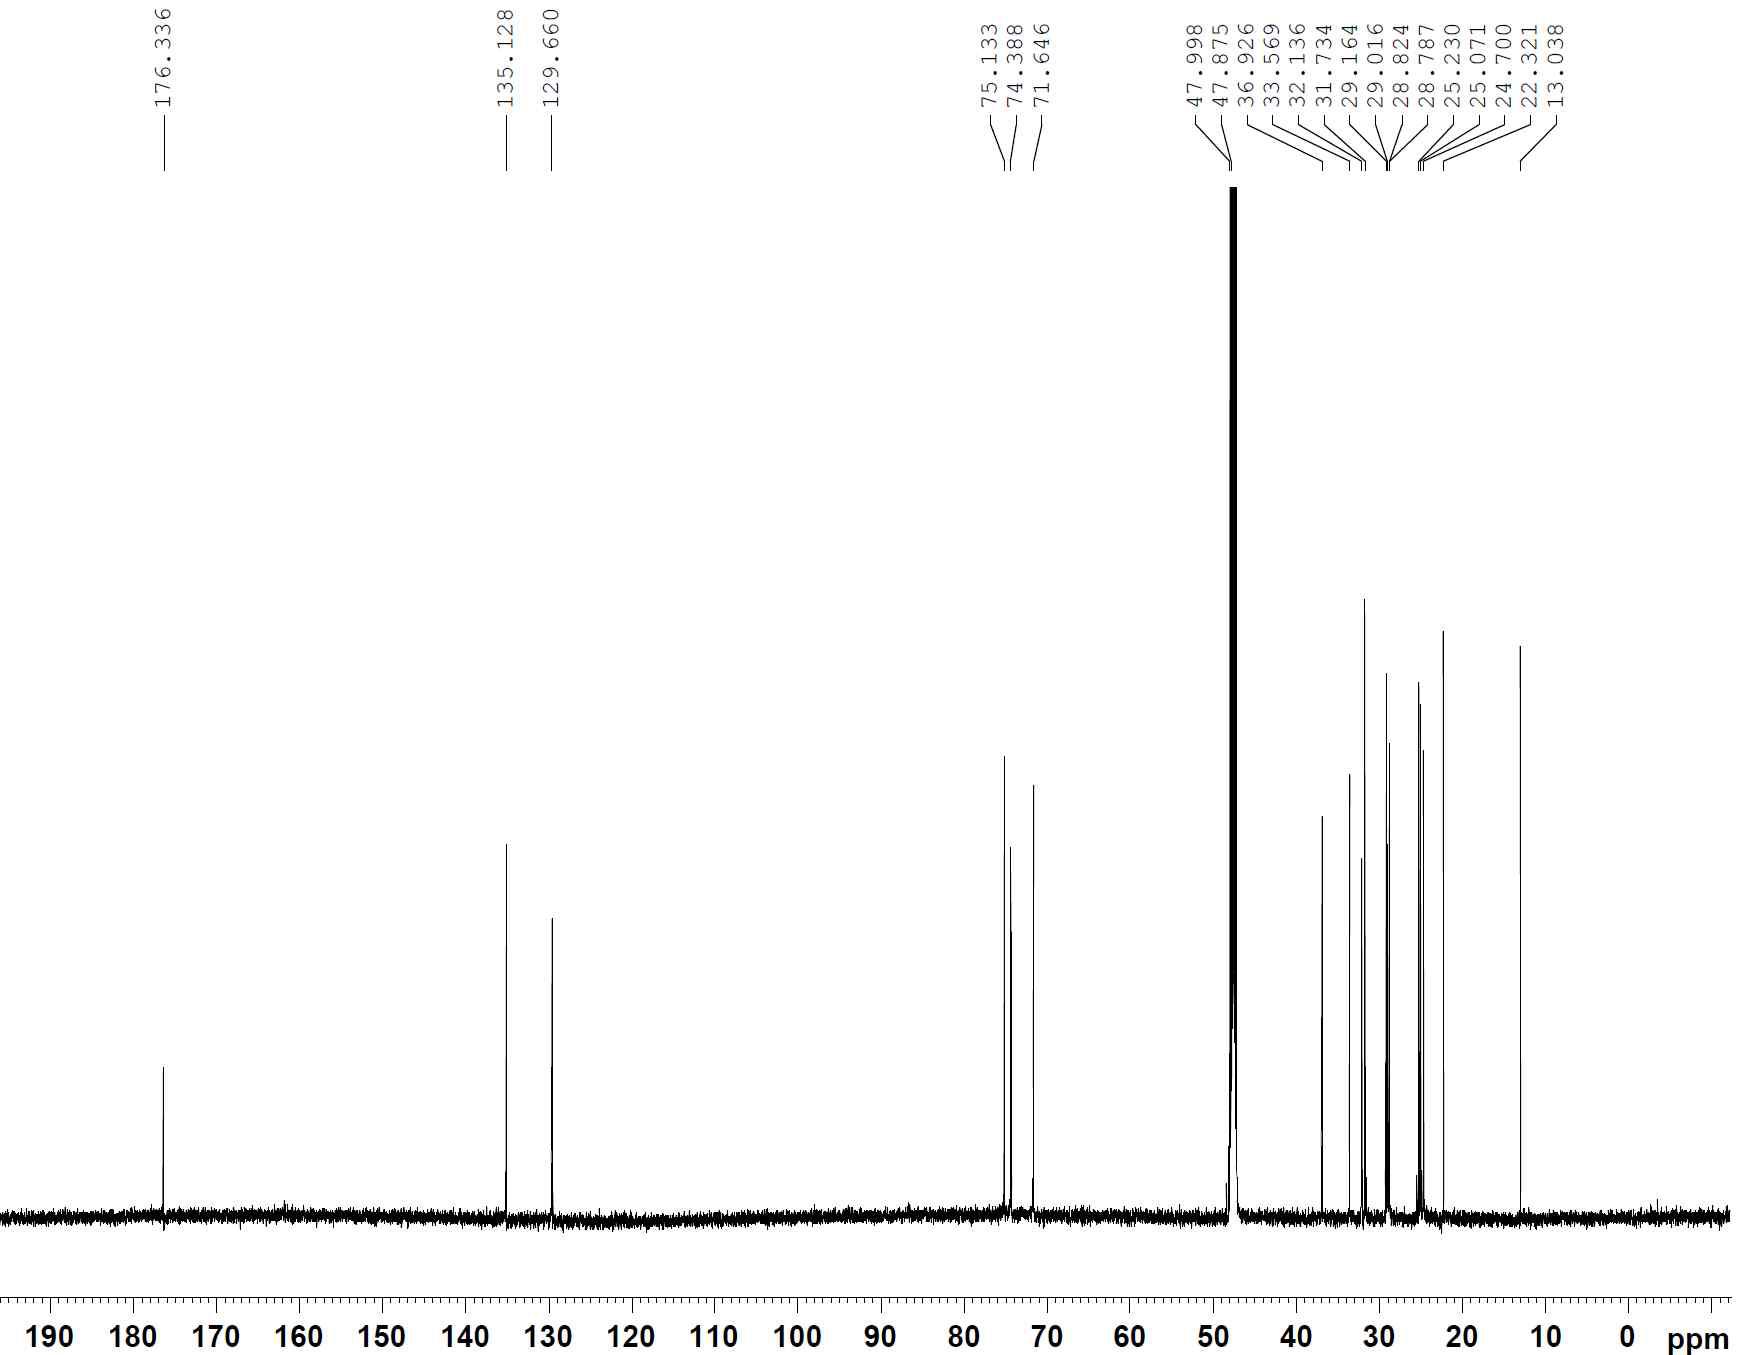 13C-NMR spectrum of compound 3